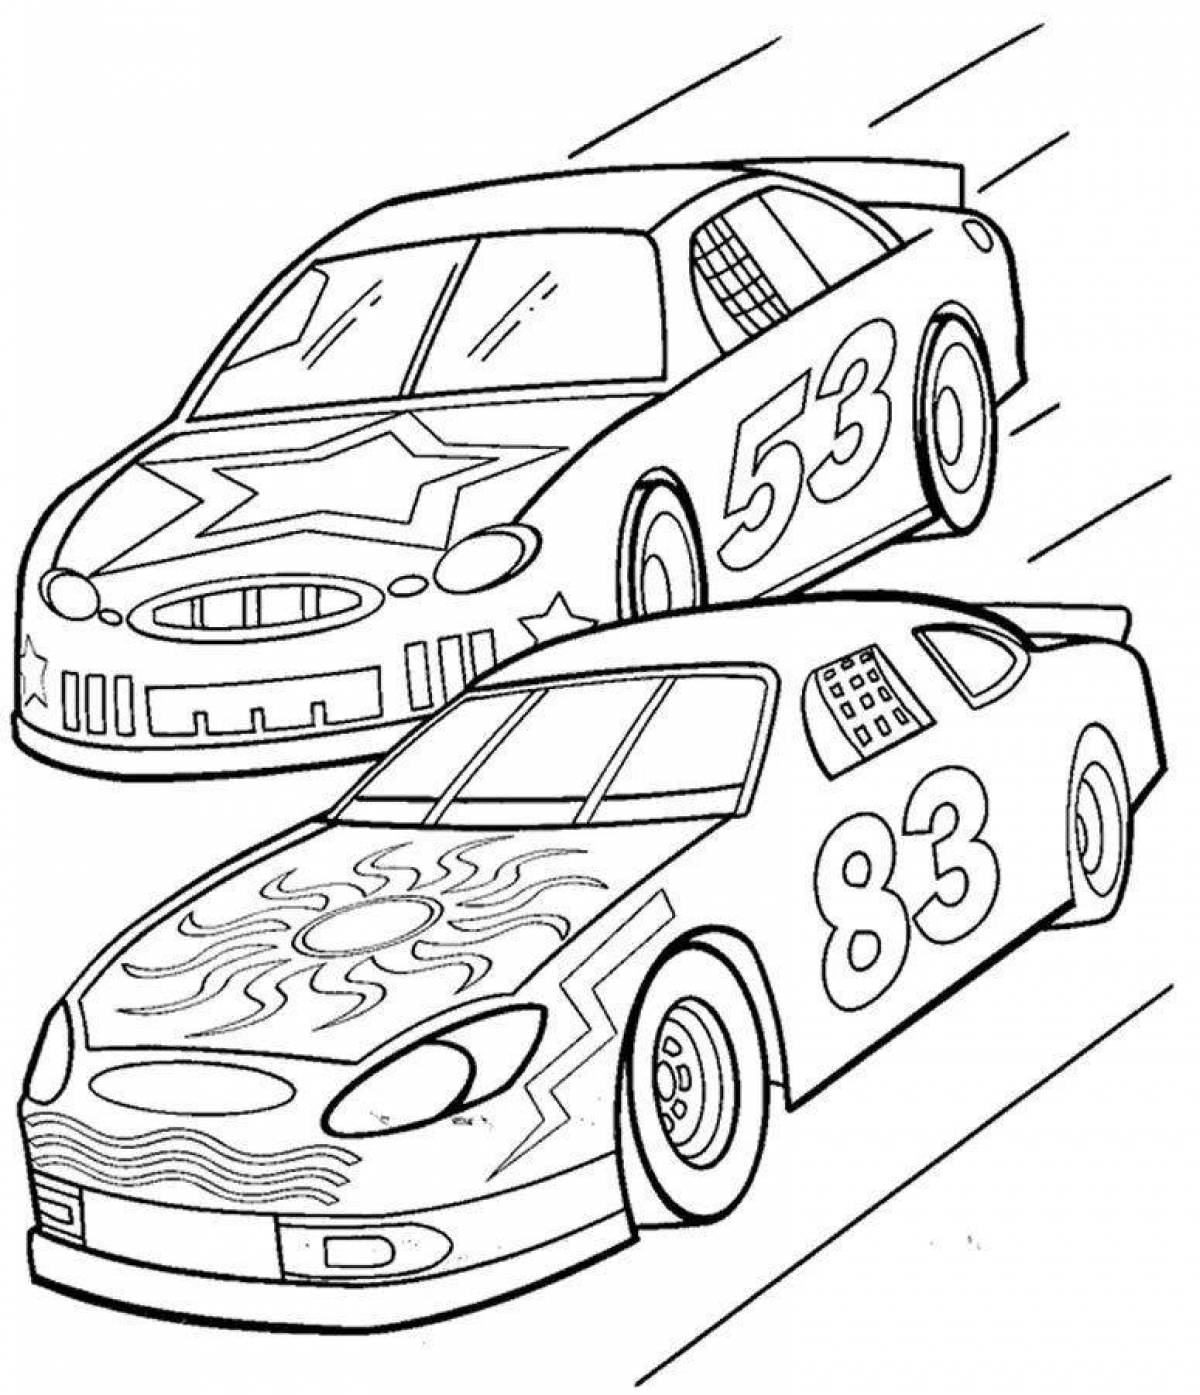 Crazy racing car coloring page